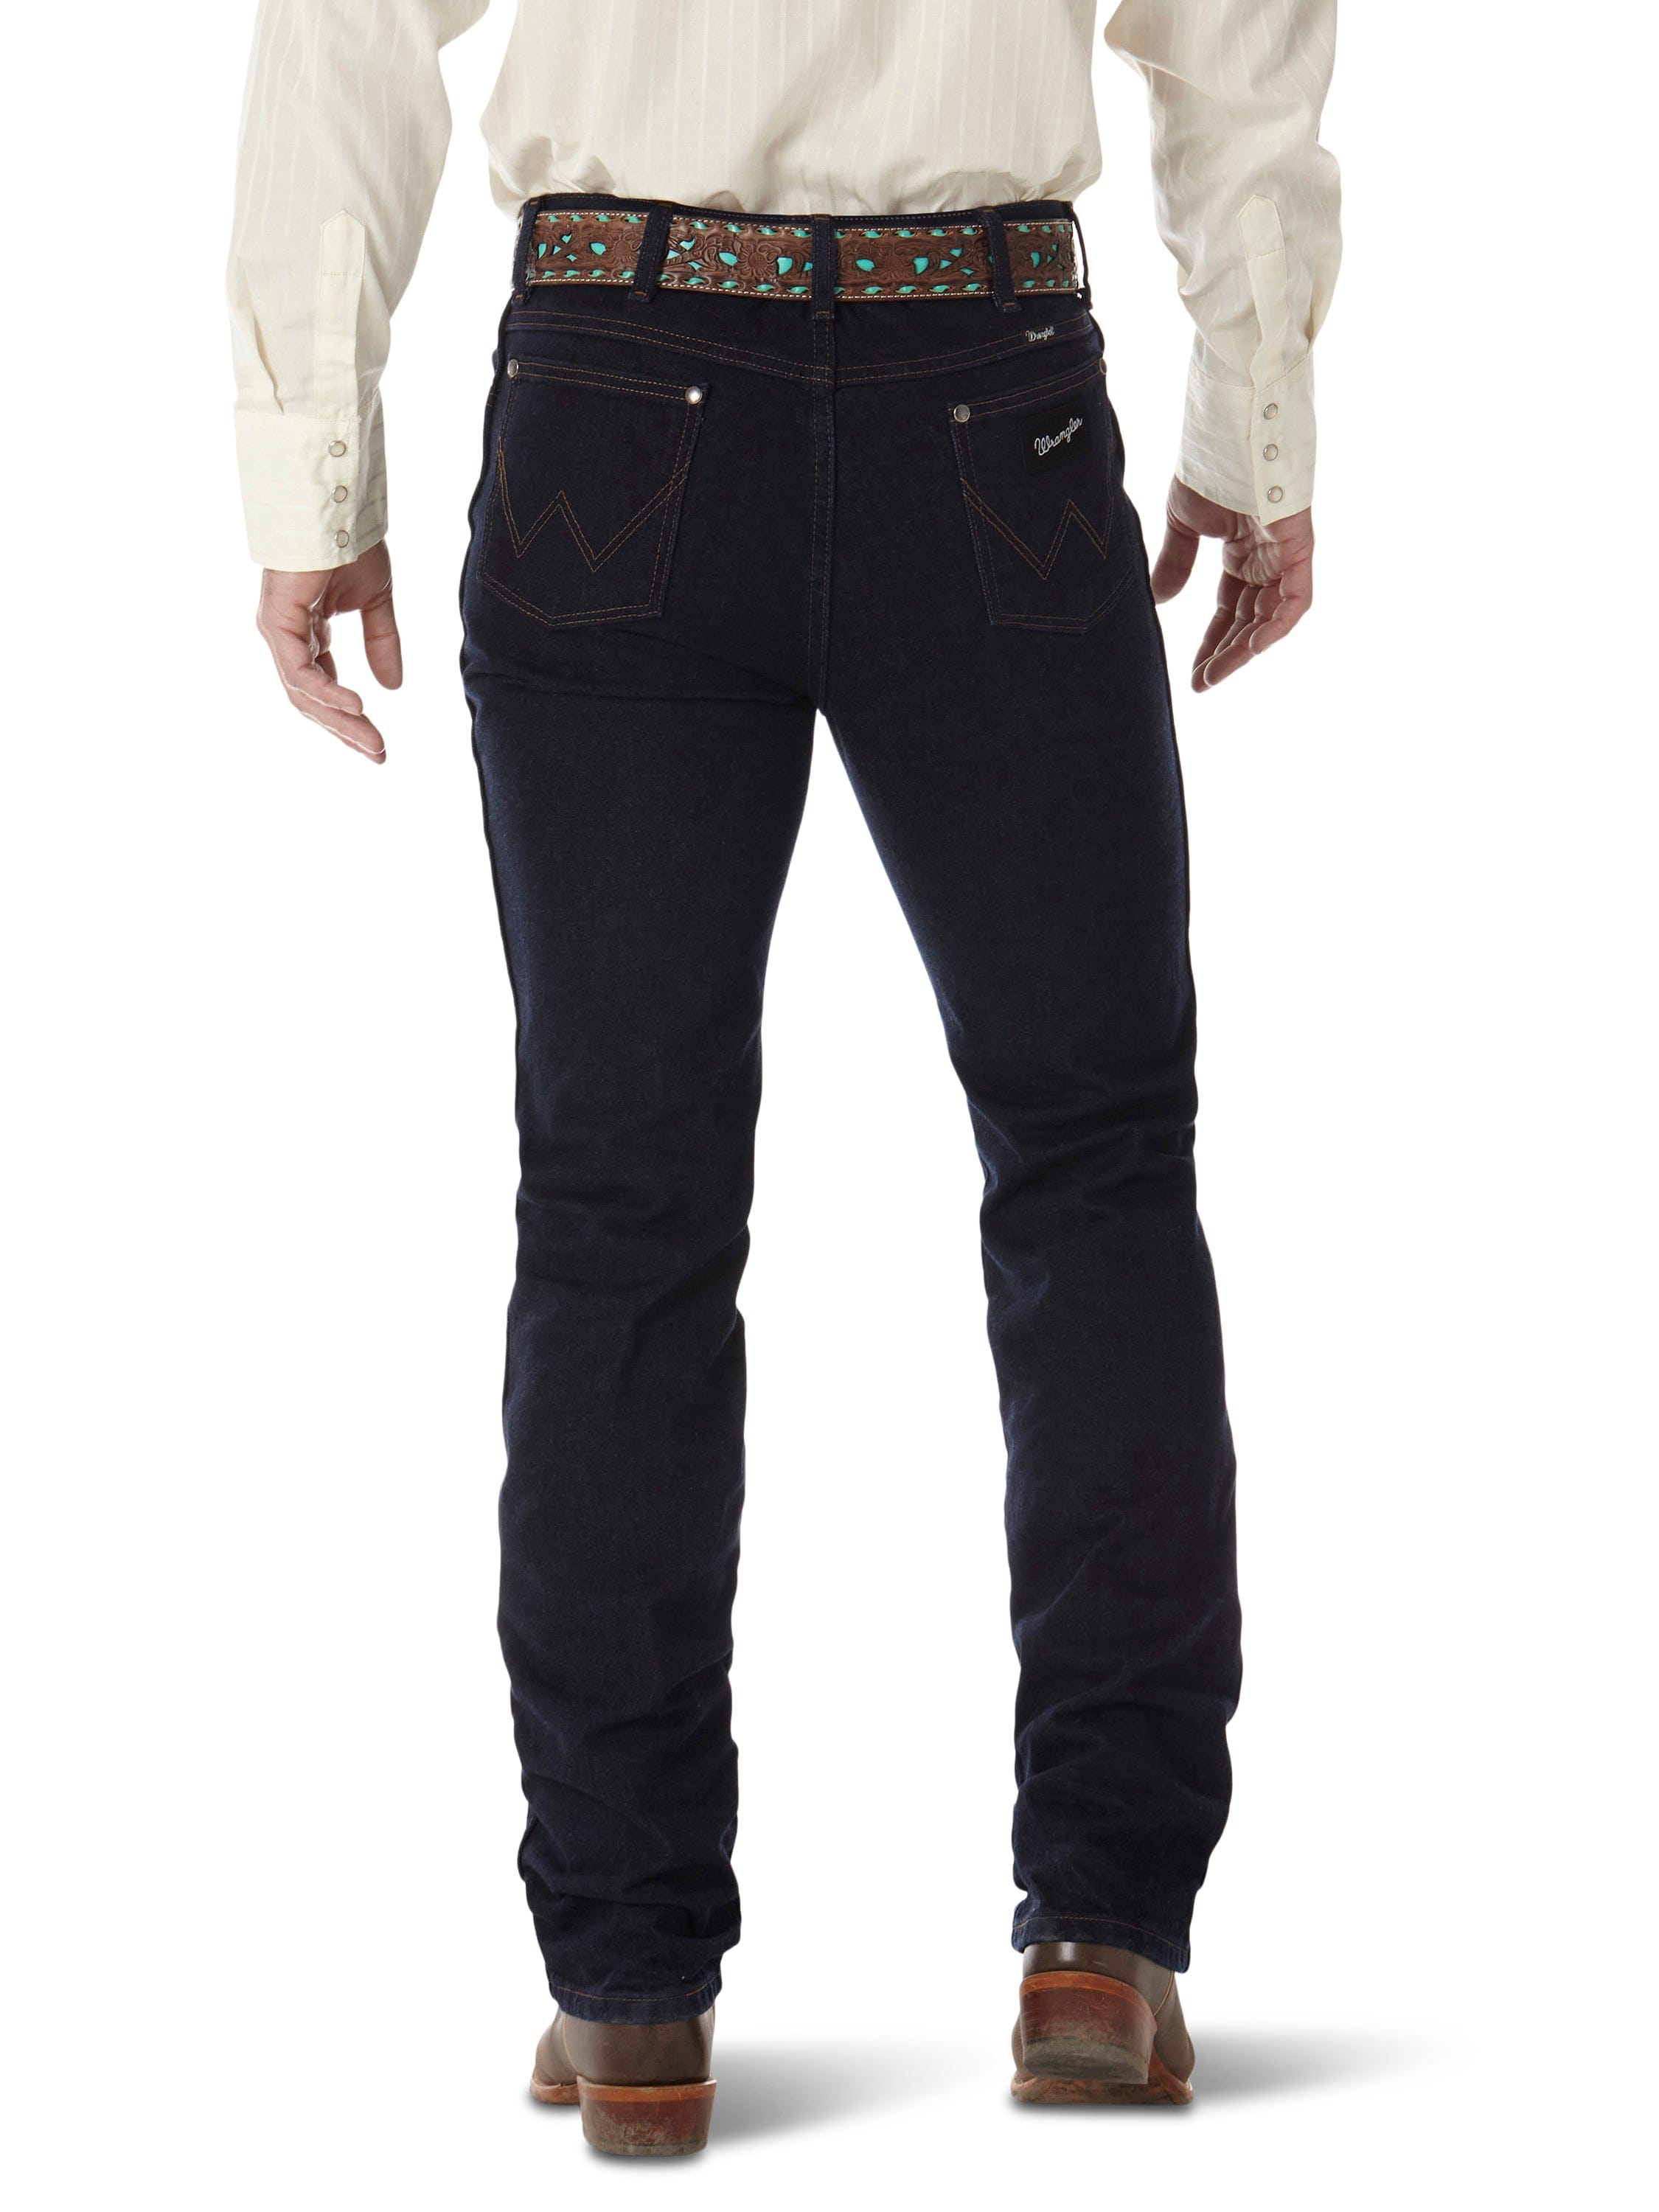 Men's Western Denim, Men's Cowboy Jeans